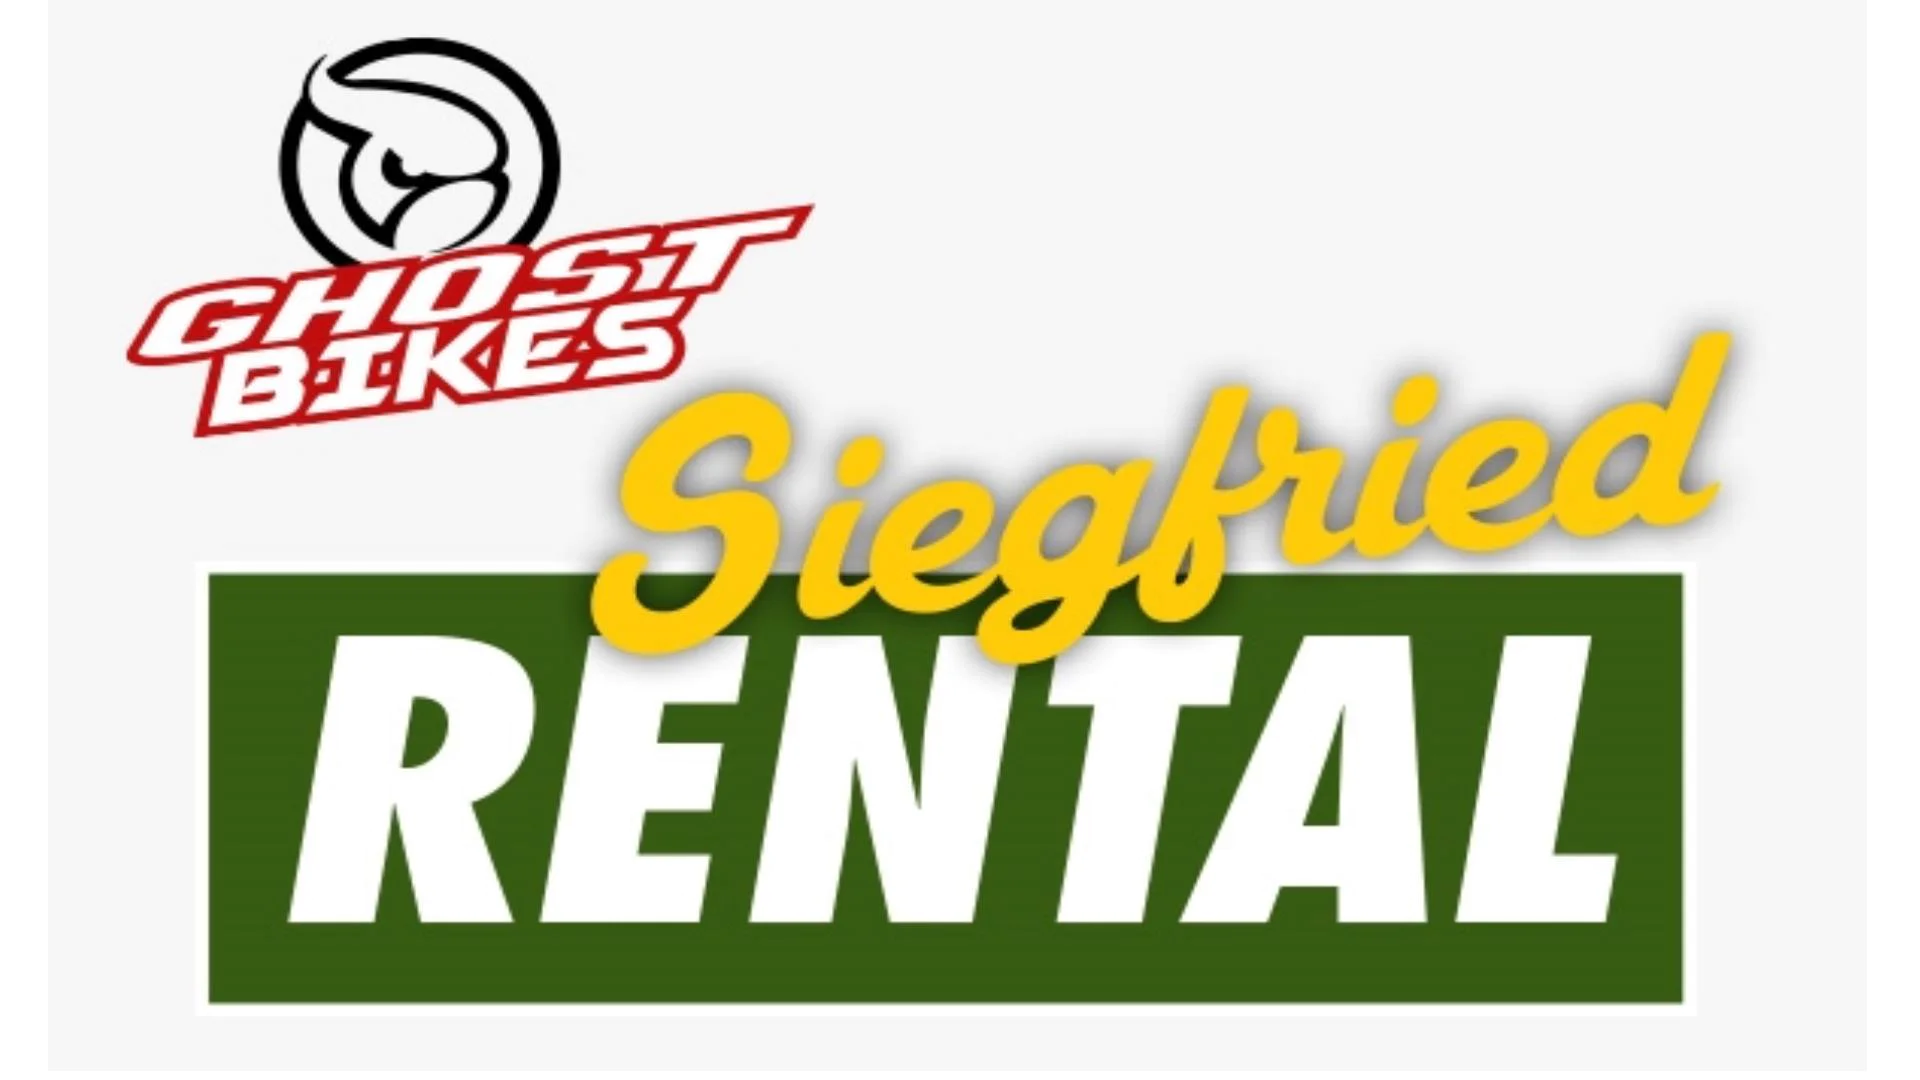 E-Bike Rental Siegfried Nova Ponente 1 suedtirol.info